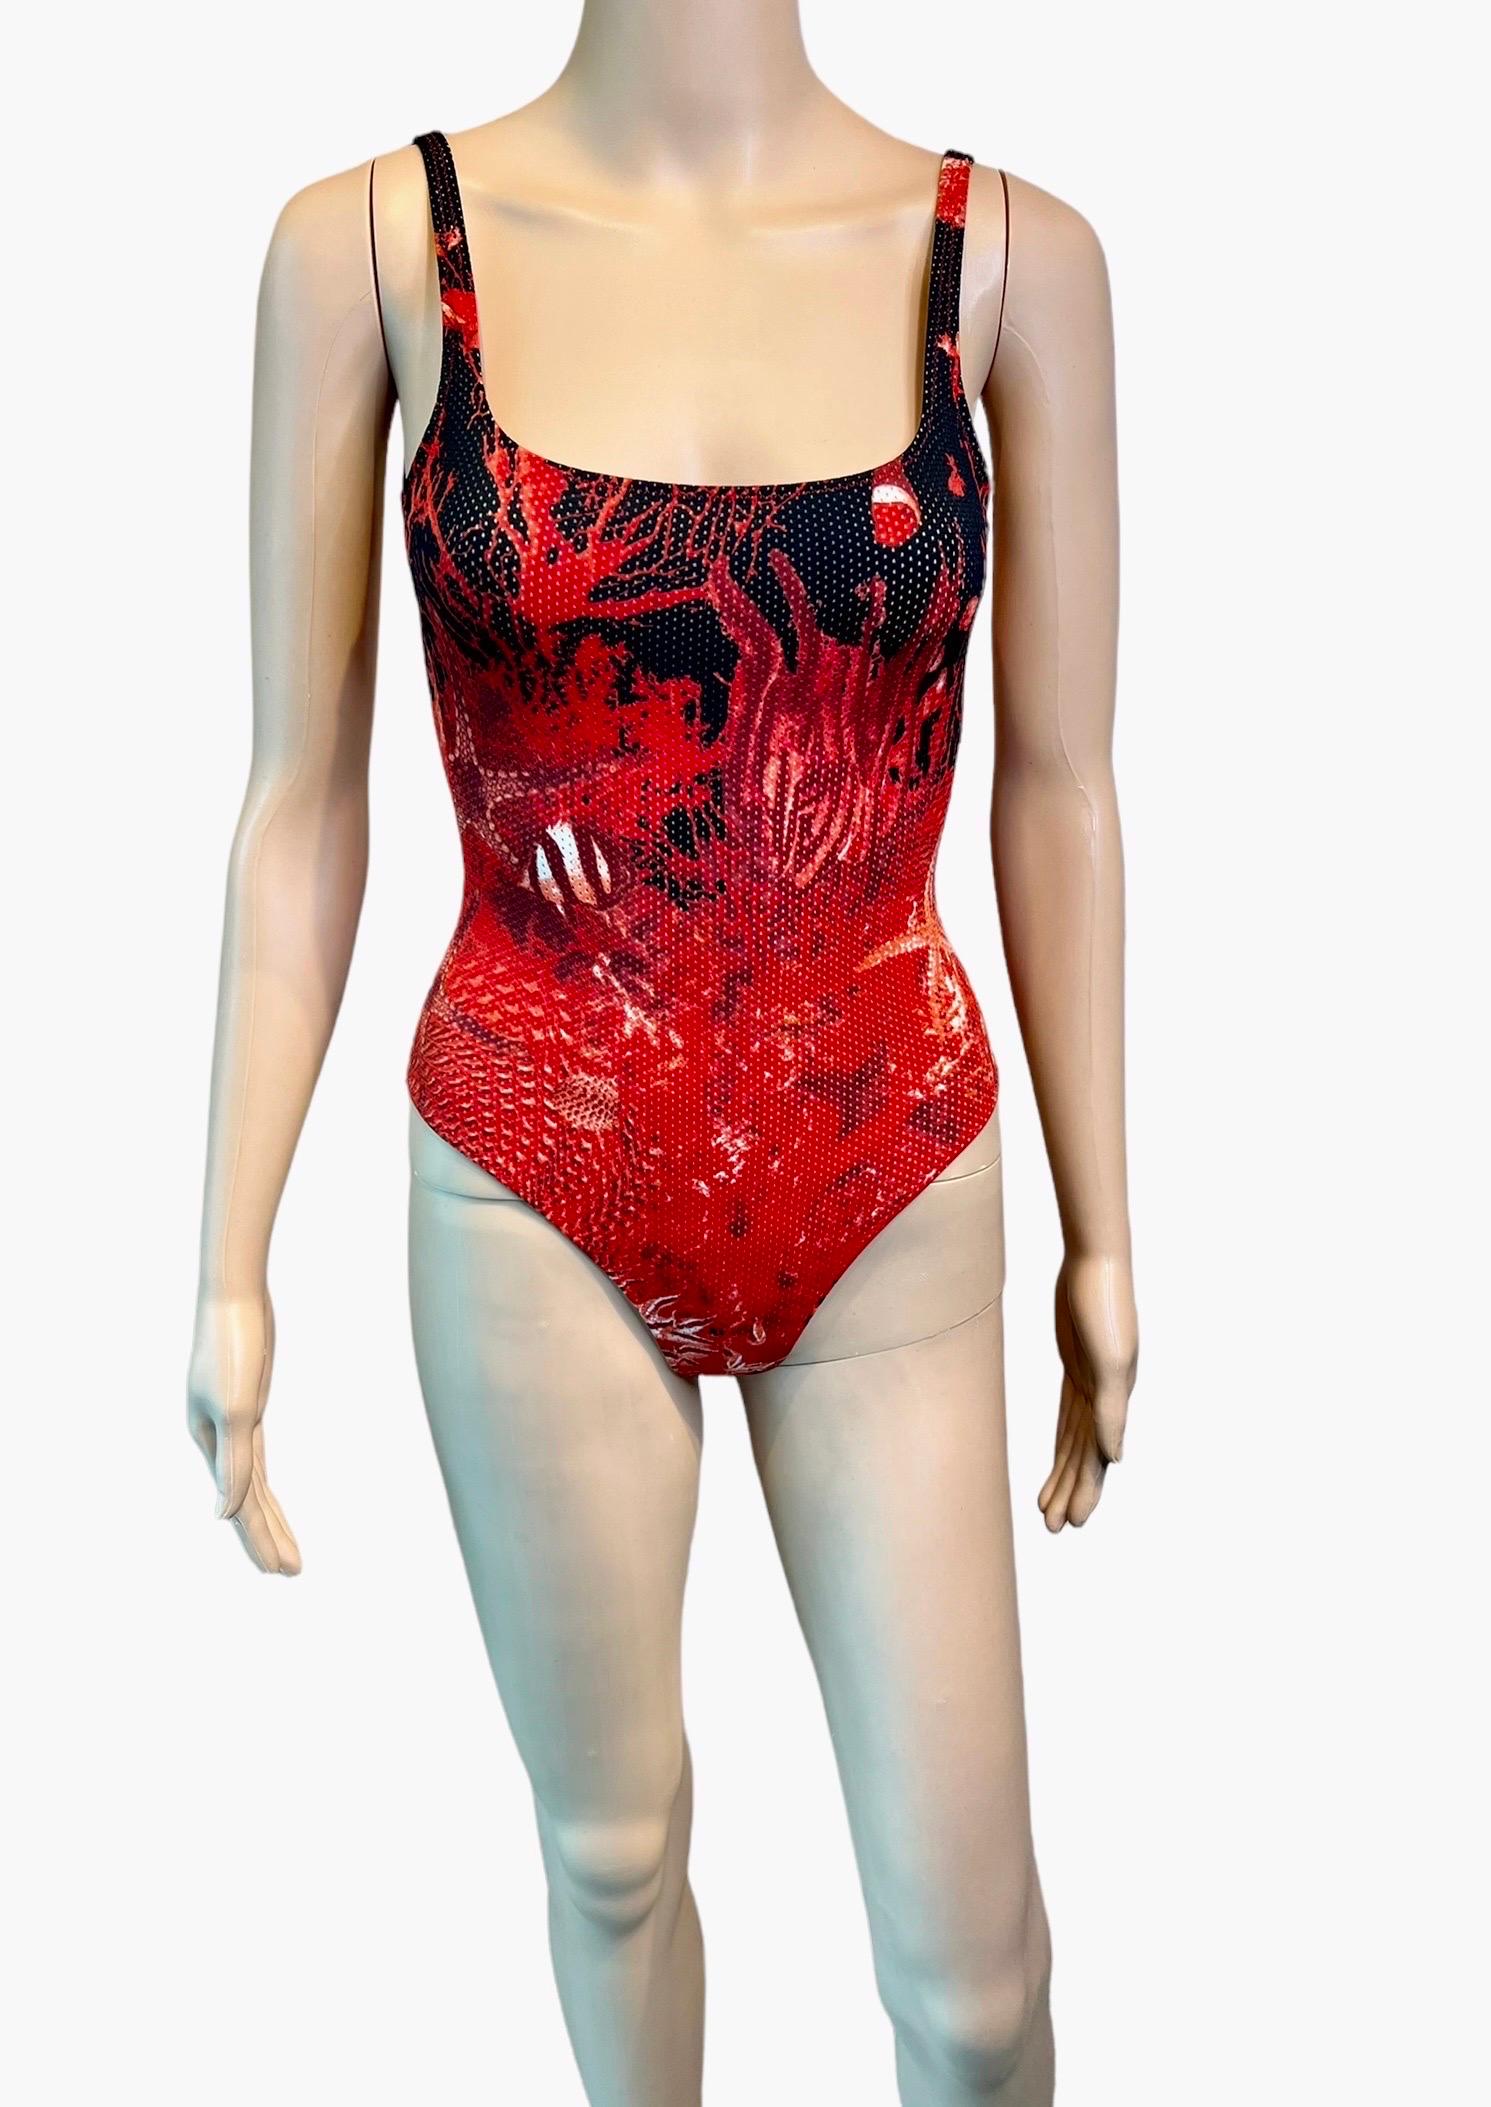 Jean Paul Gaultier Soleil S/S 1999 Sea Life Print Bodysuit Swimwear Swimsuit IT 40

Condition: Excellent Condition, Like New
